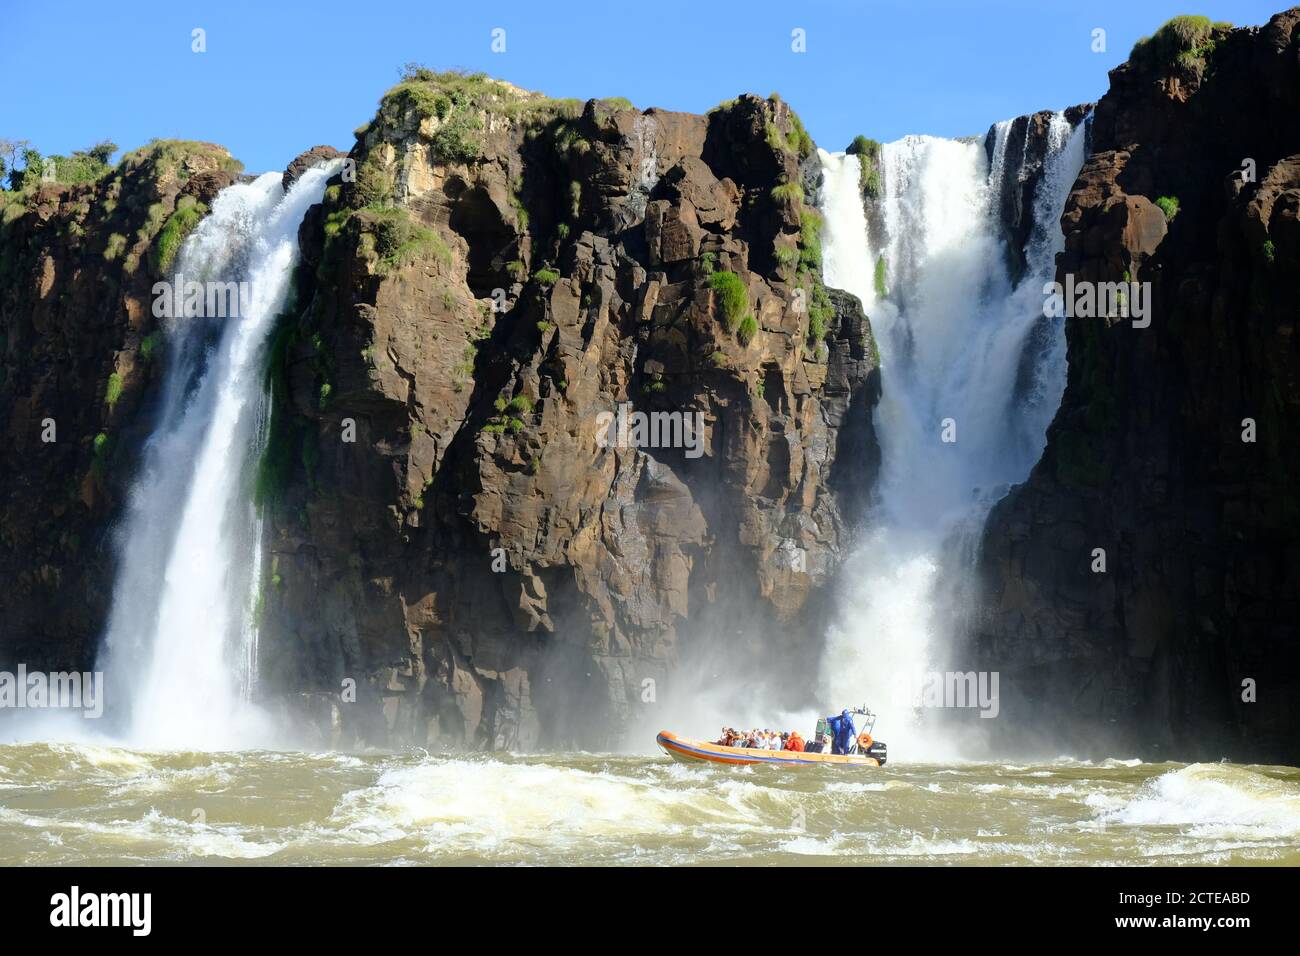 Brasile Foz do Iguacu - Cascate Iguazu - Las Cataratas Del Iguazu con escursione in barca Foto Stock